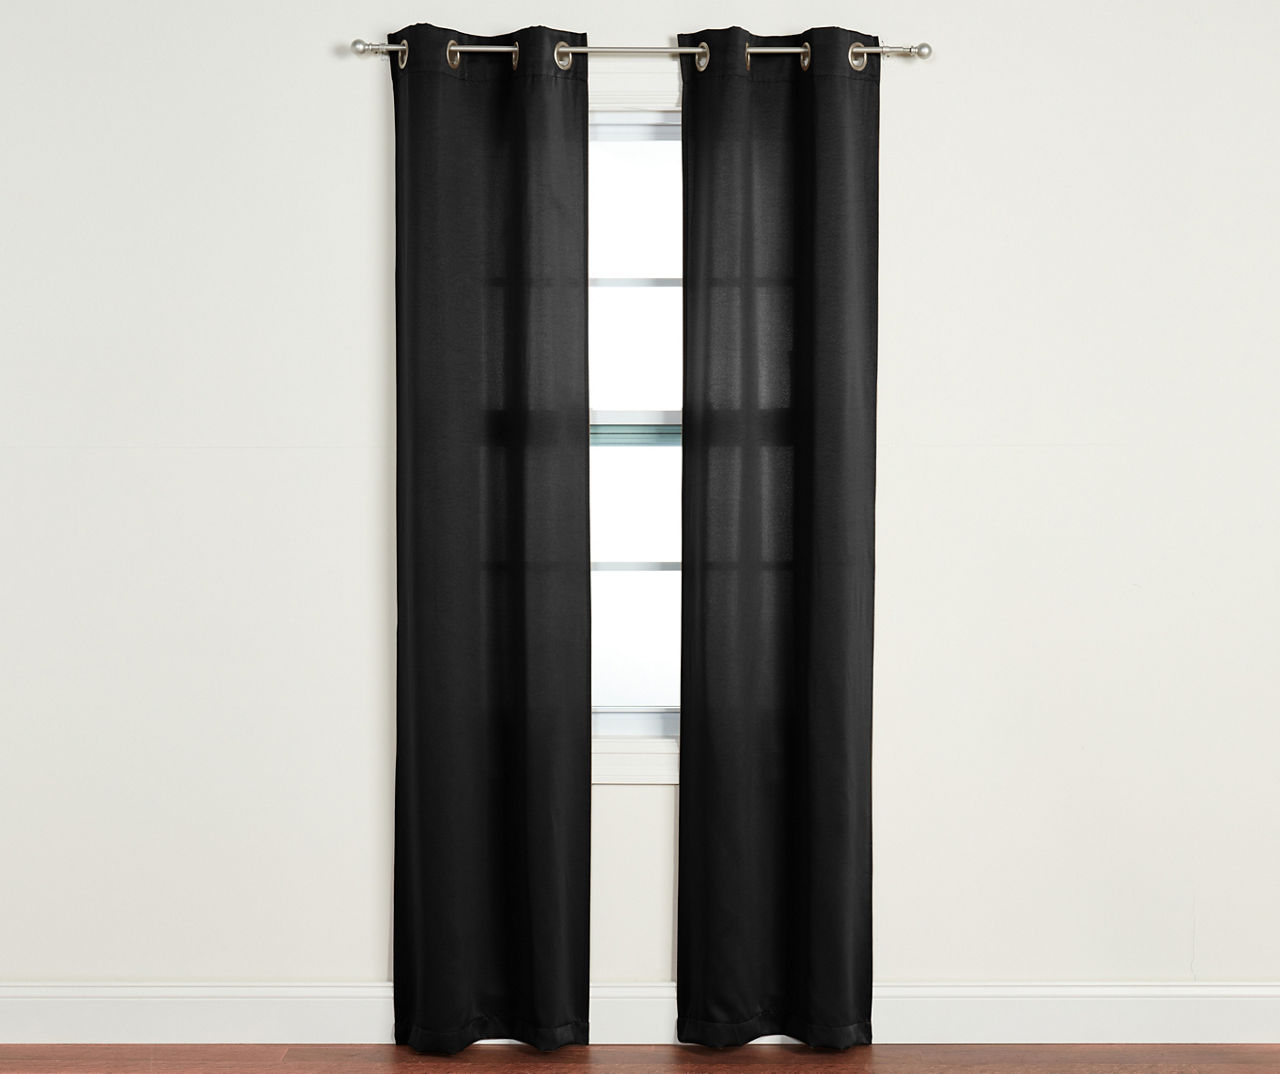 4-Piece Putnam Black Room-Darkening Curtain Panels Set, (84")